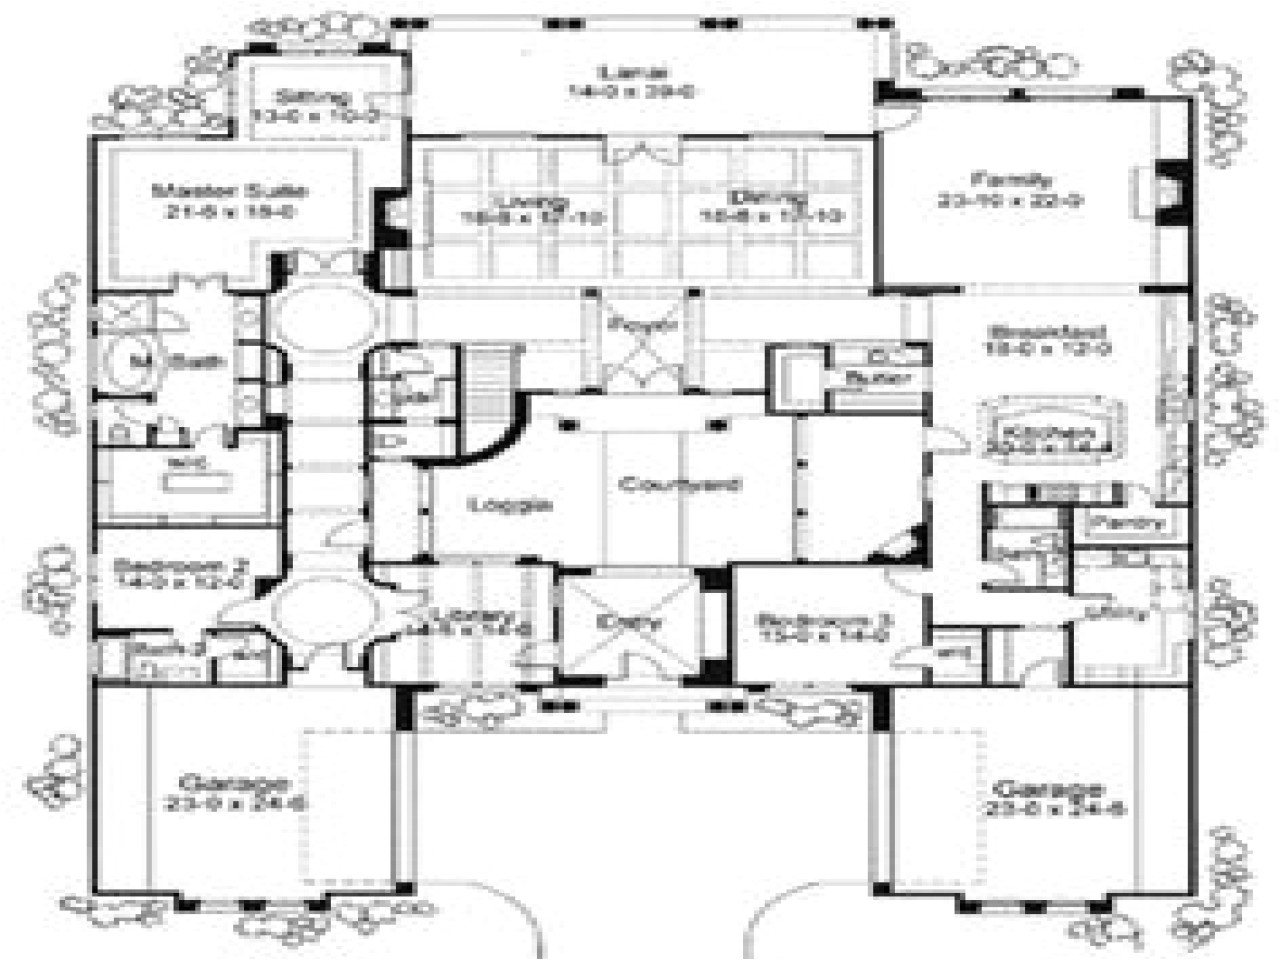 2322a94c0d28f207 mediterranean house floor plans mediterranean house plans with courtyards